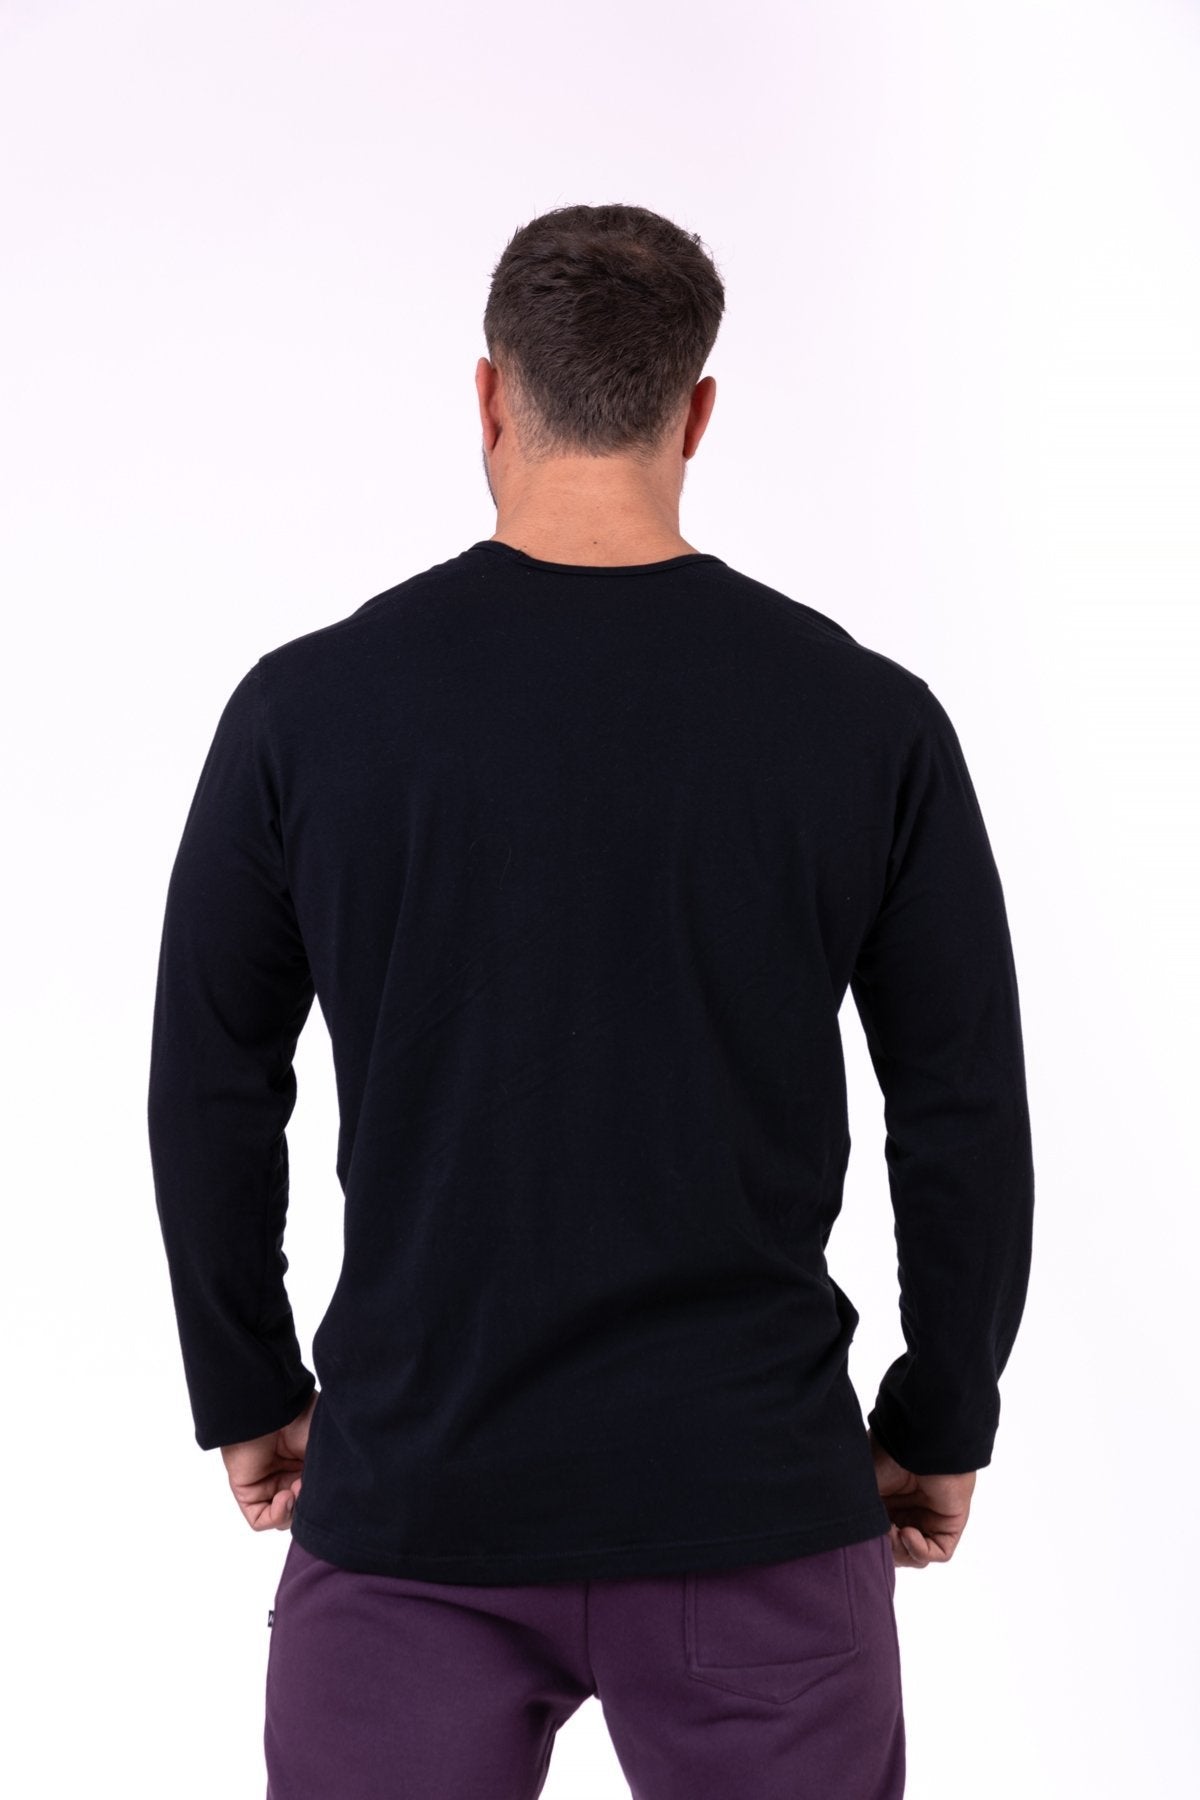 Nebbia More Than Basic! Shirt 147 - Black - Urban Gym Wear